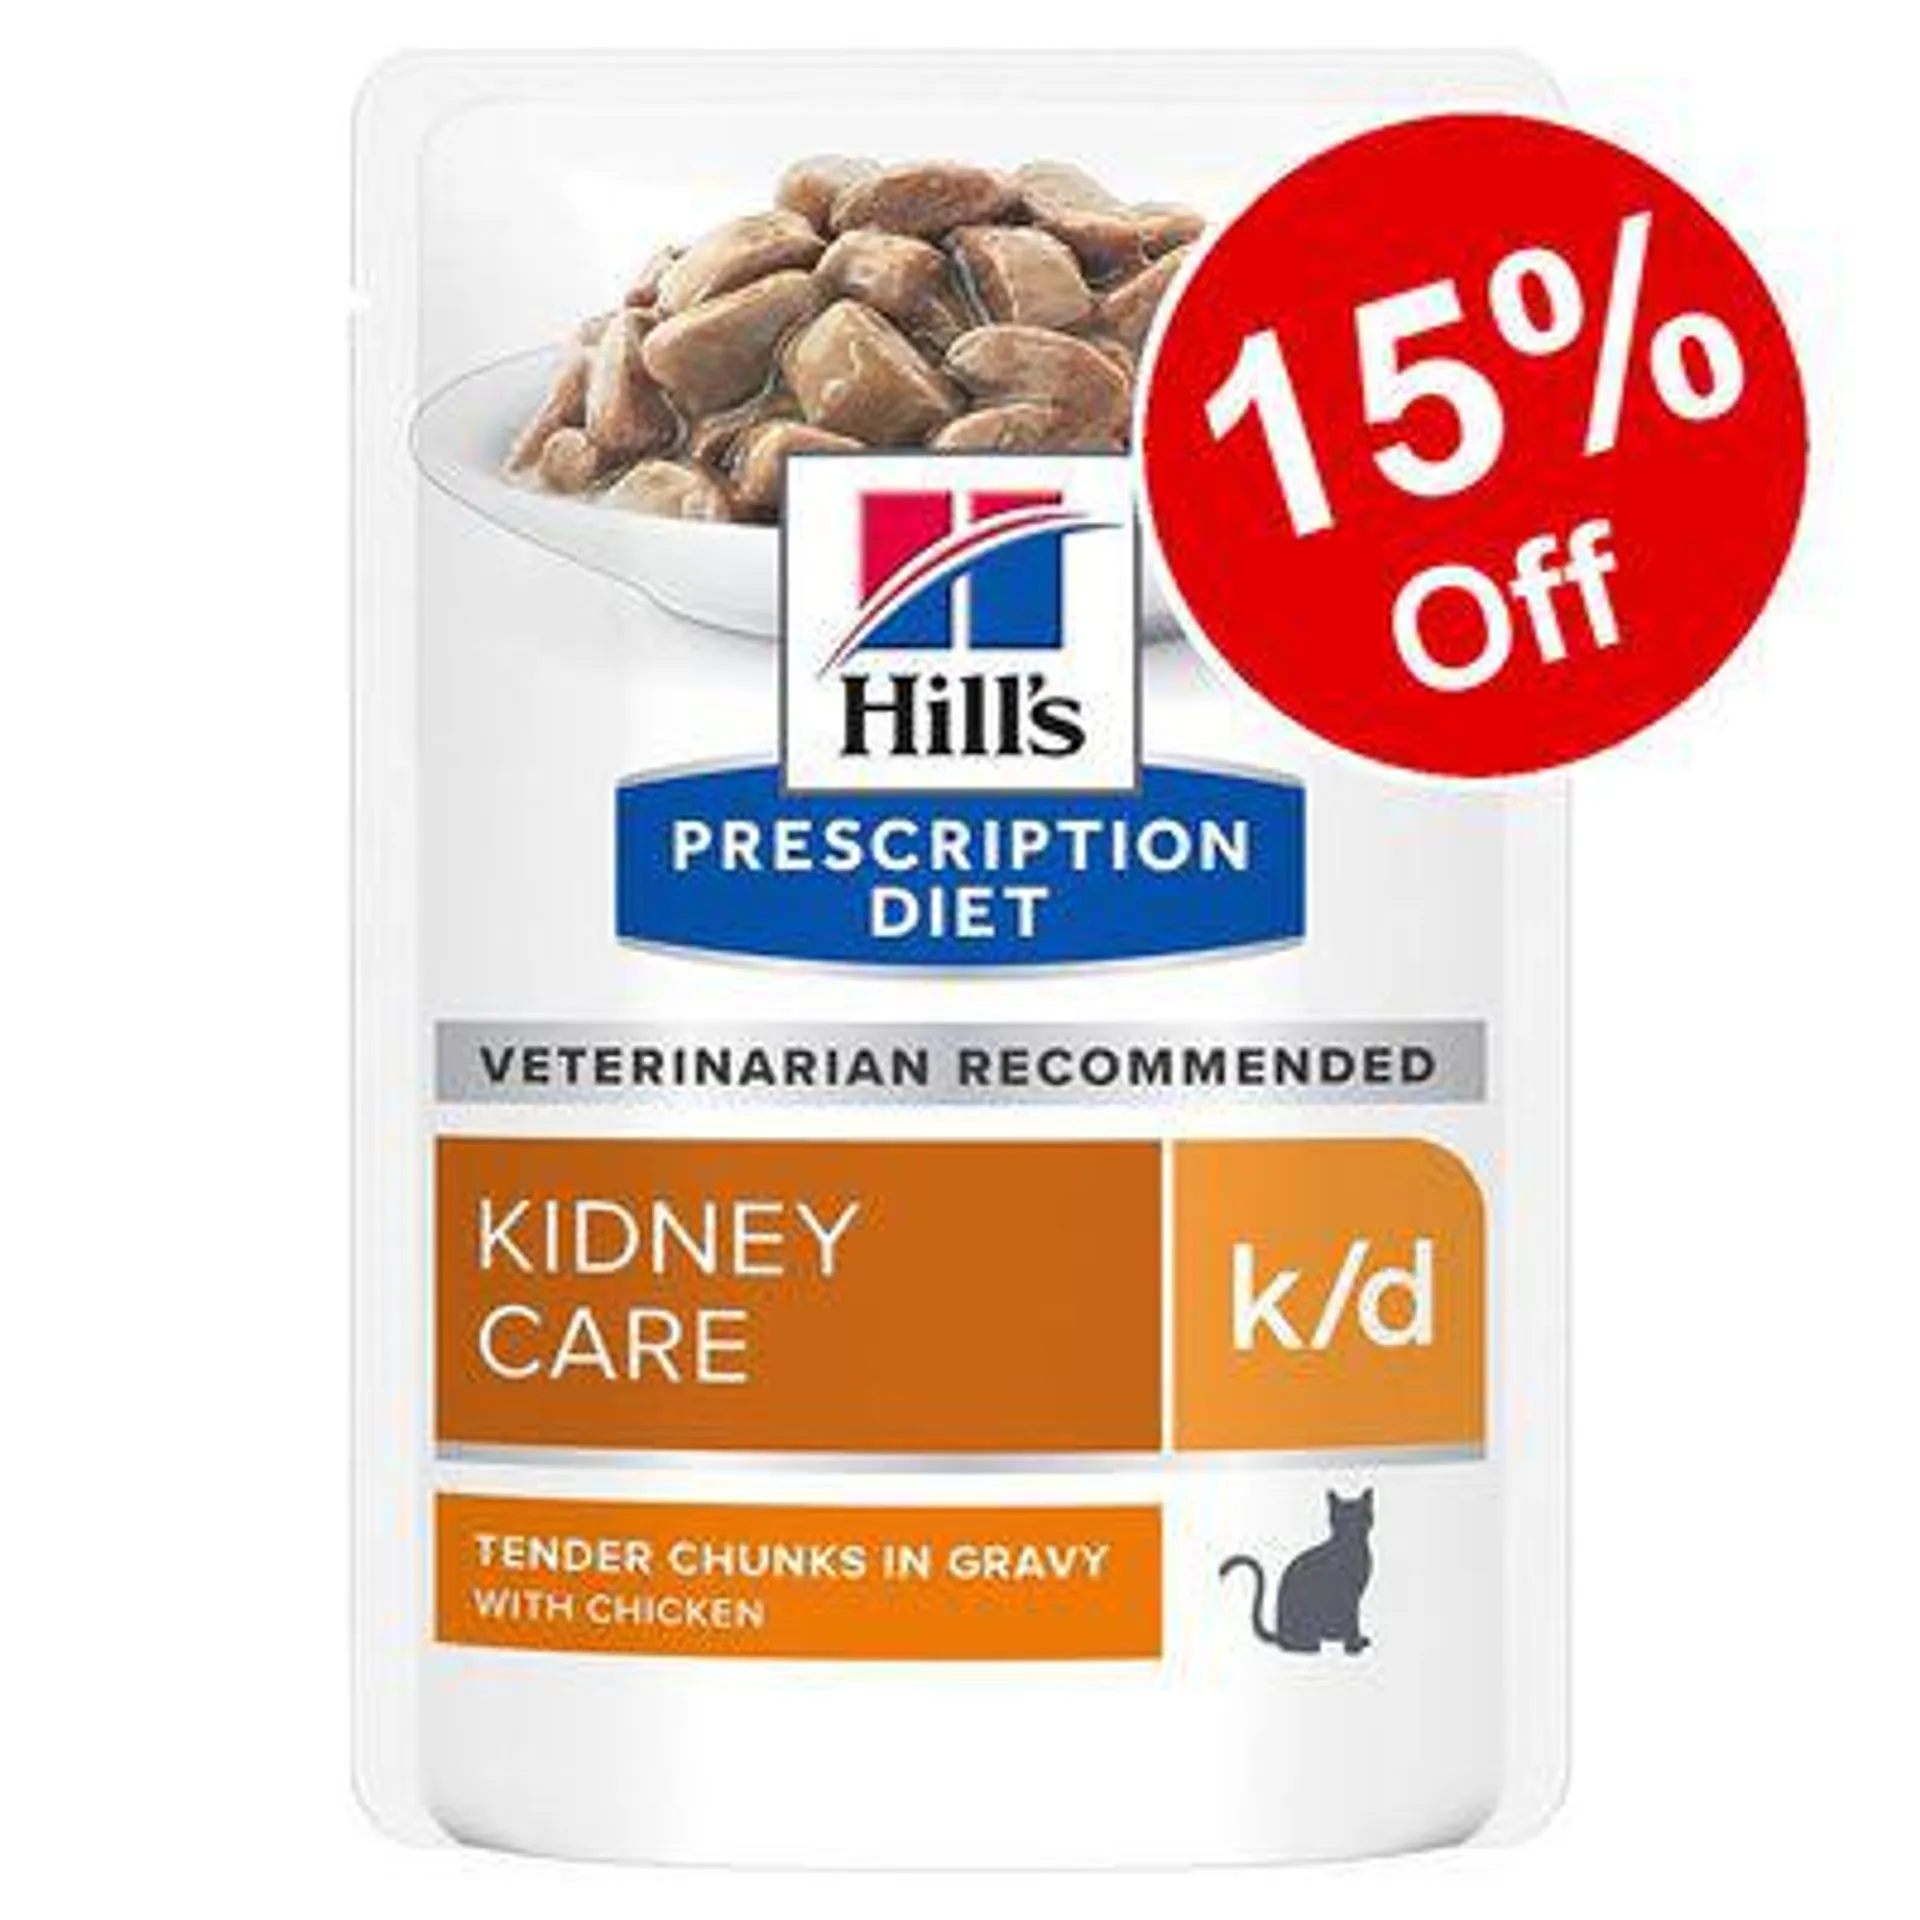 2 x 12 Hill's Prescription Diet Feline Wet Cat Food - 15% Off!*